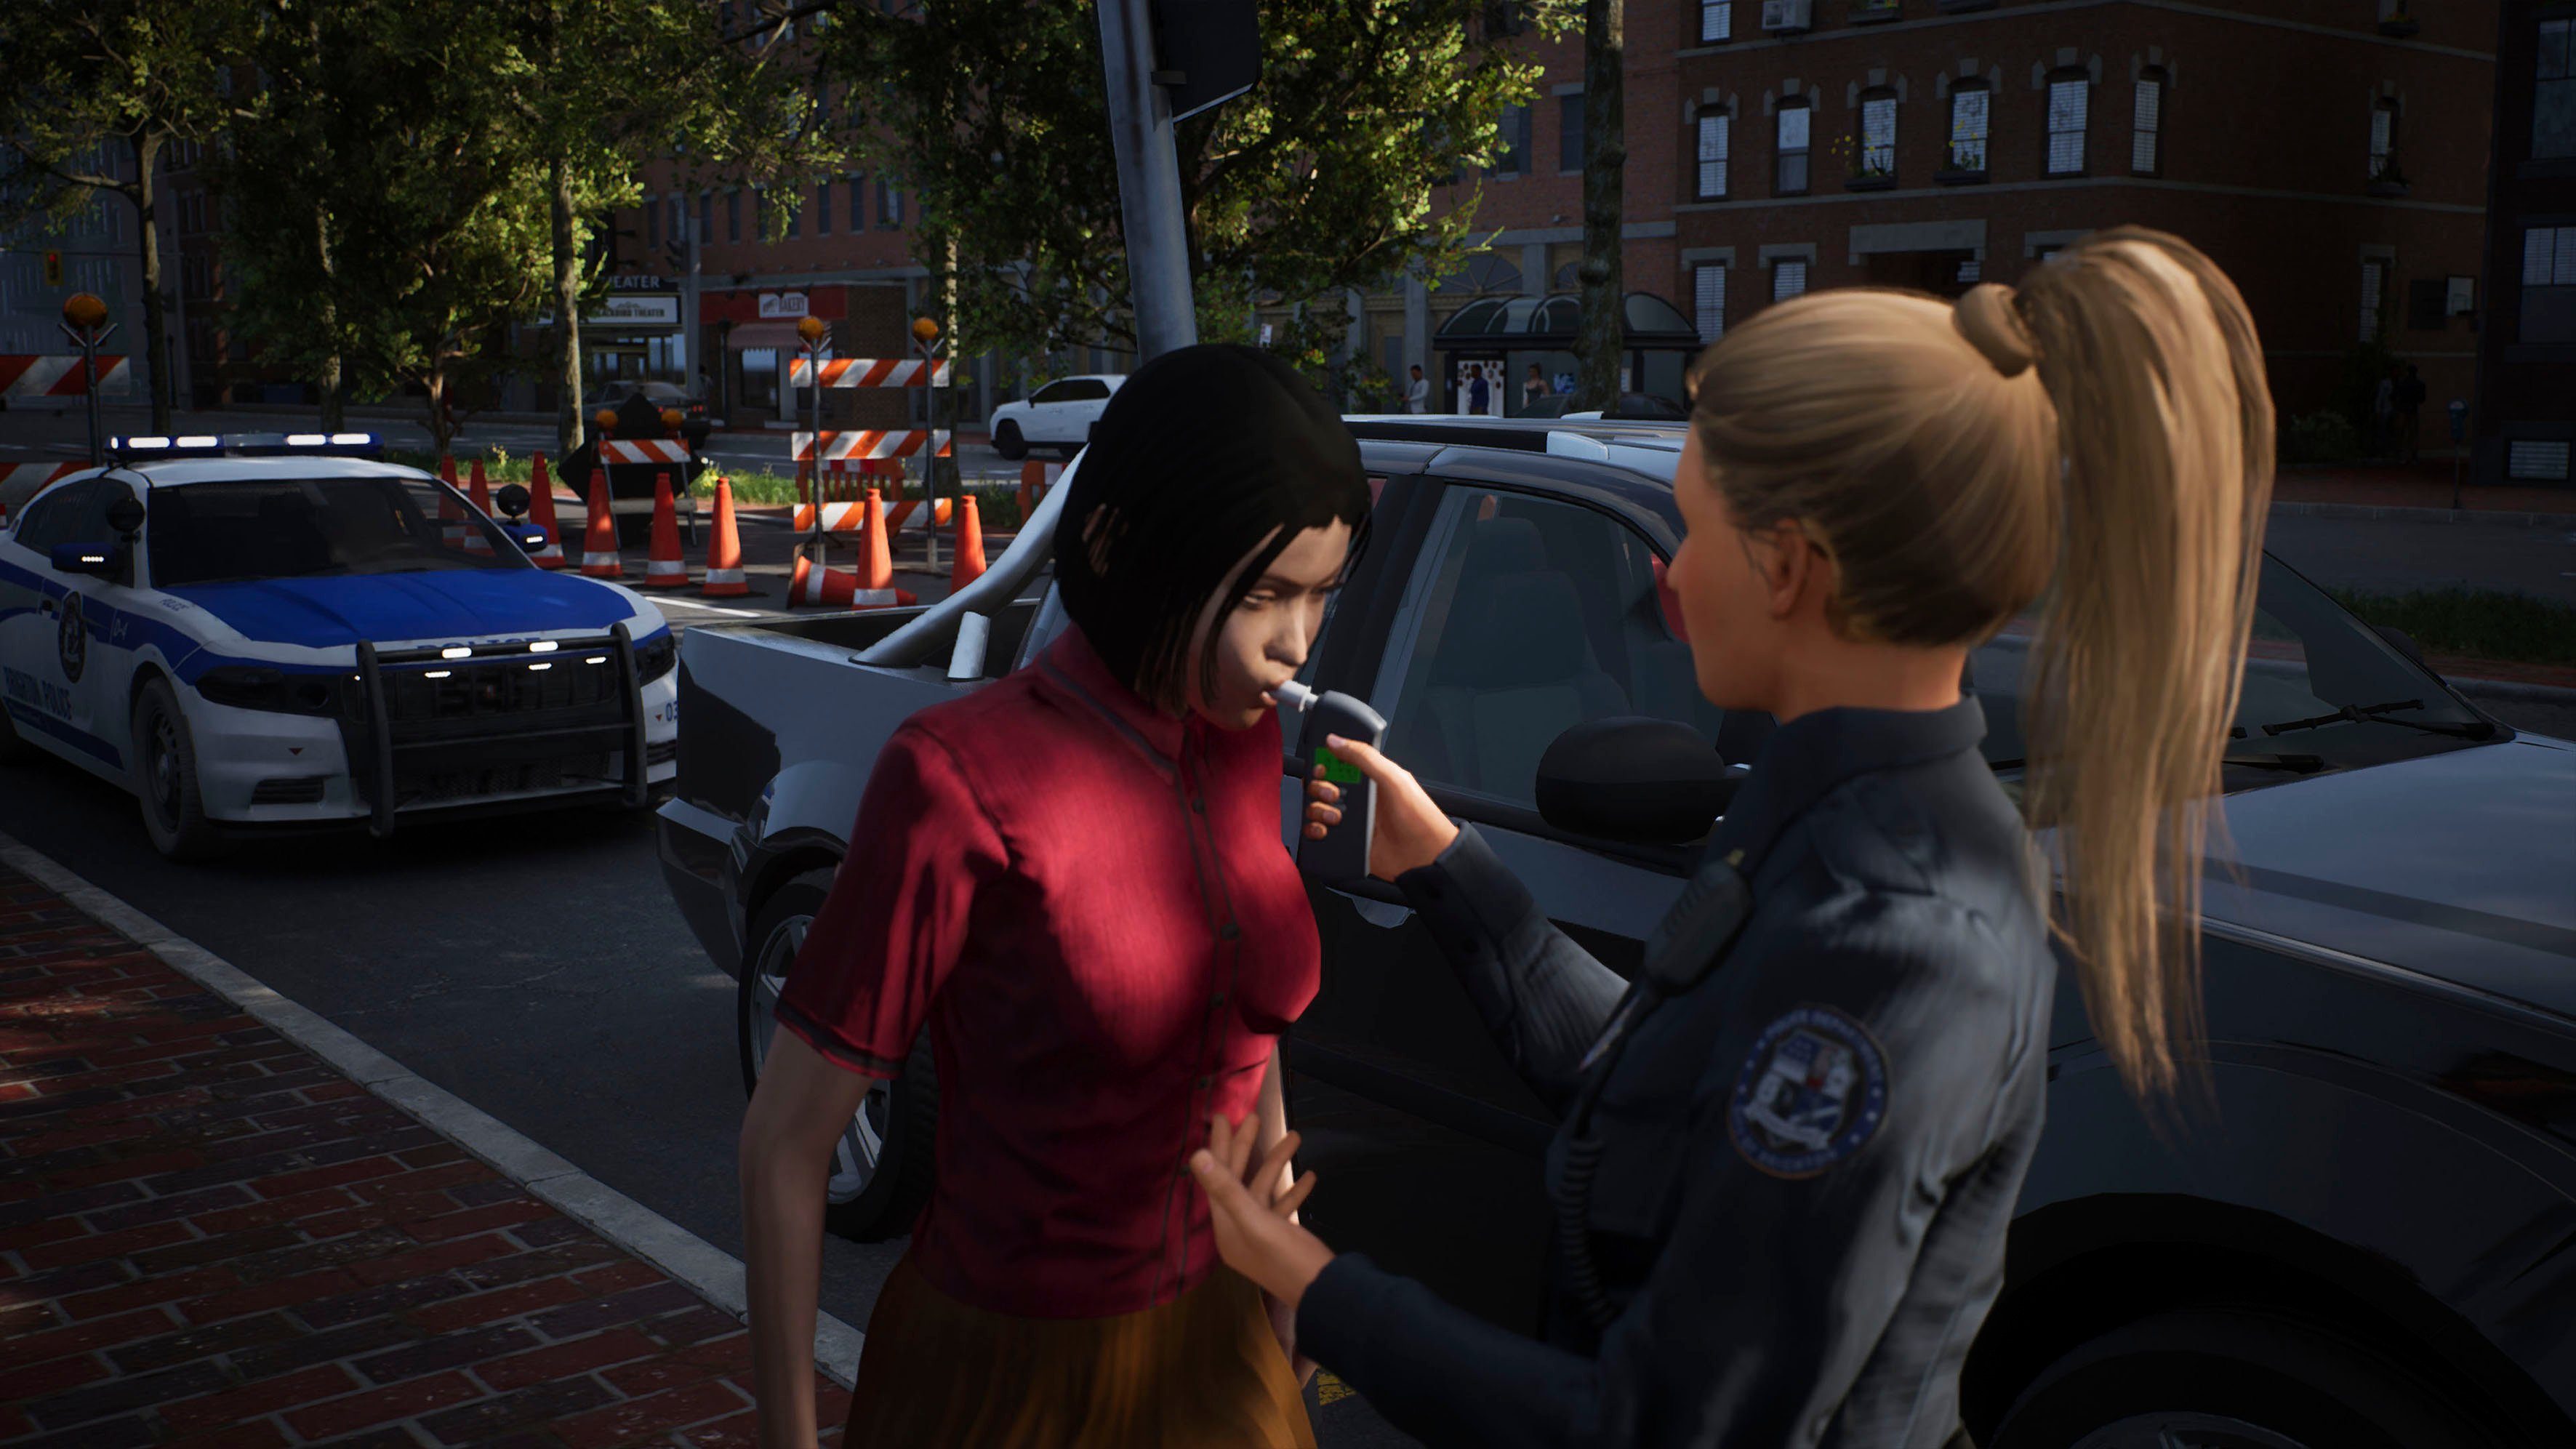 Astragon Police PlayStation Patrol 4 Officers Simulator